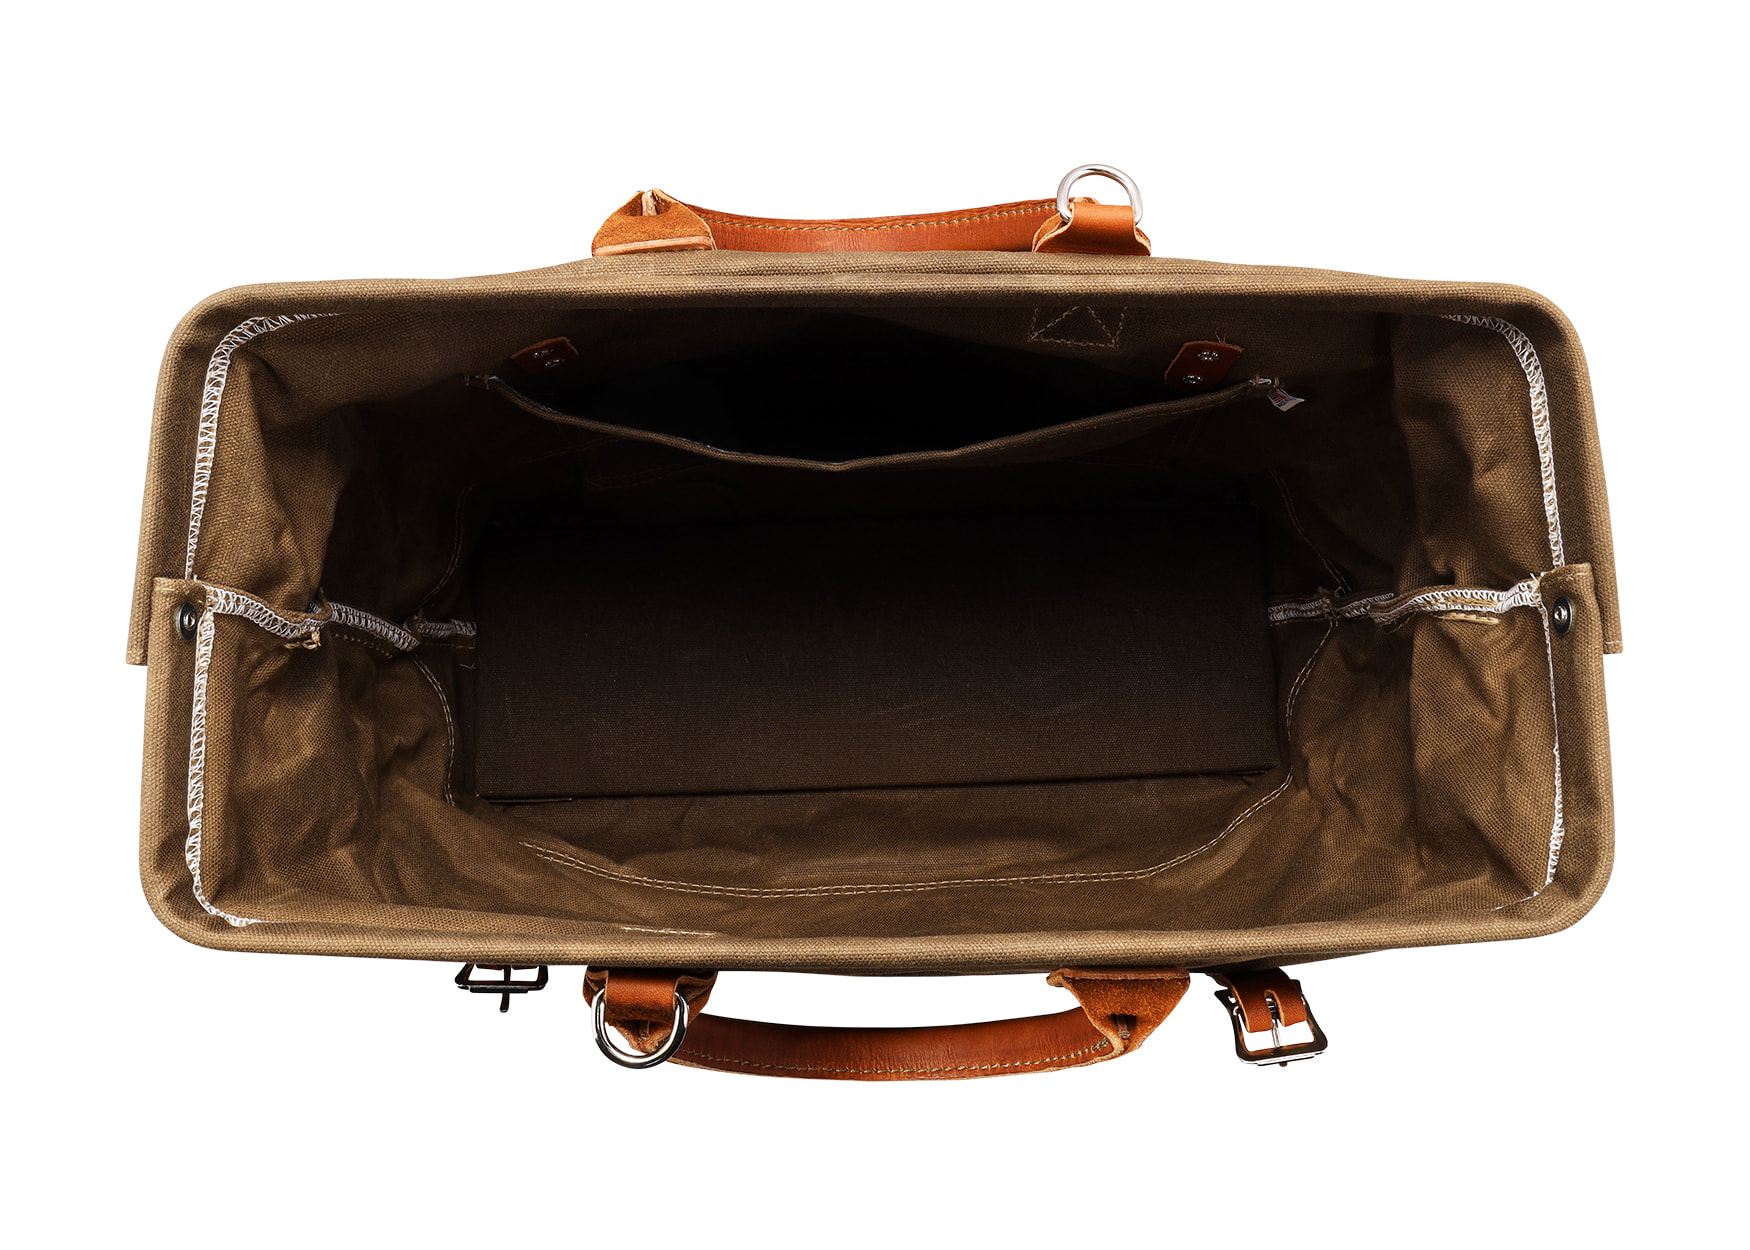 Tassen & portemonnees Bagage & Reizen Weekendtassen Leather Waxed Canvas Mason Tool & Travel Bag 14" Opening 